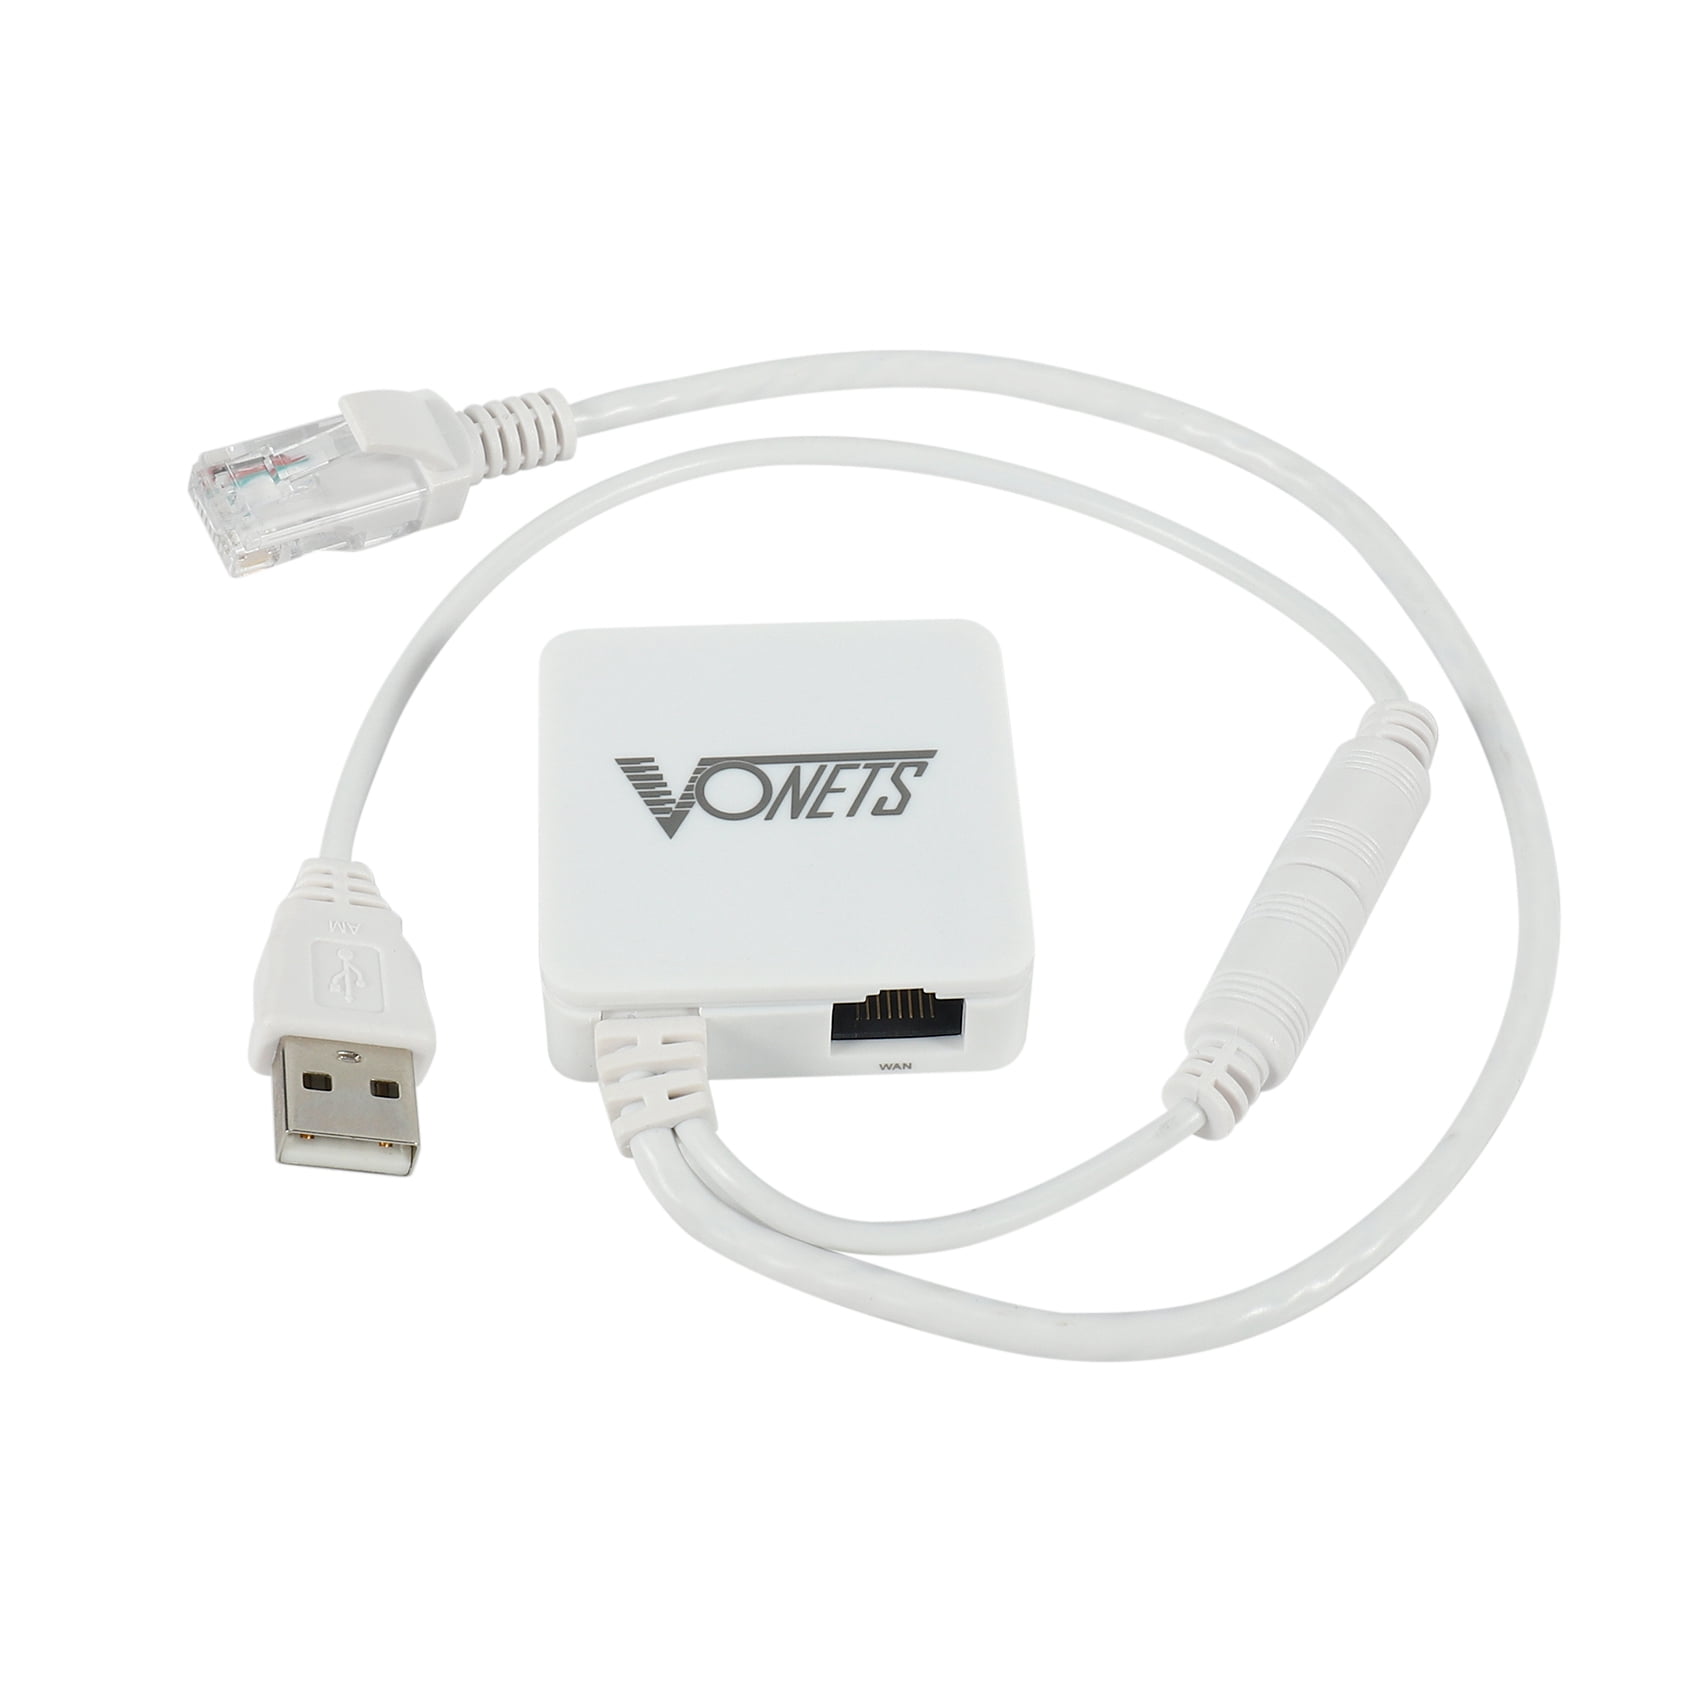 Vonets VAR11N Mini Wireless N WiFi Router Repeater Bridge USB Port For Xbox 360 